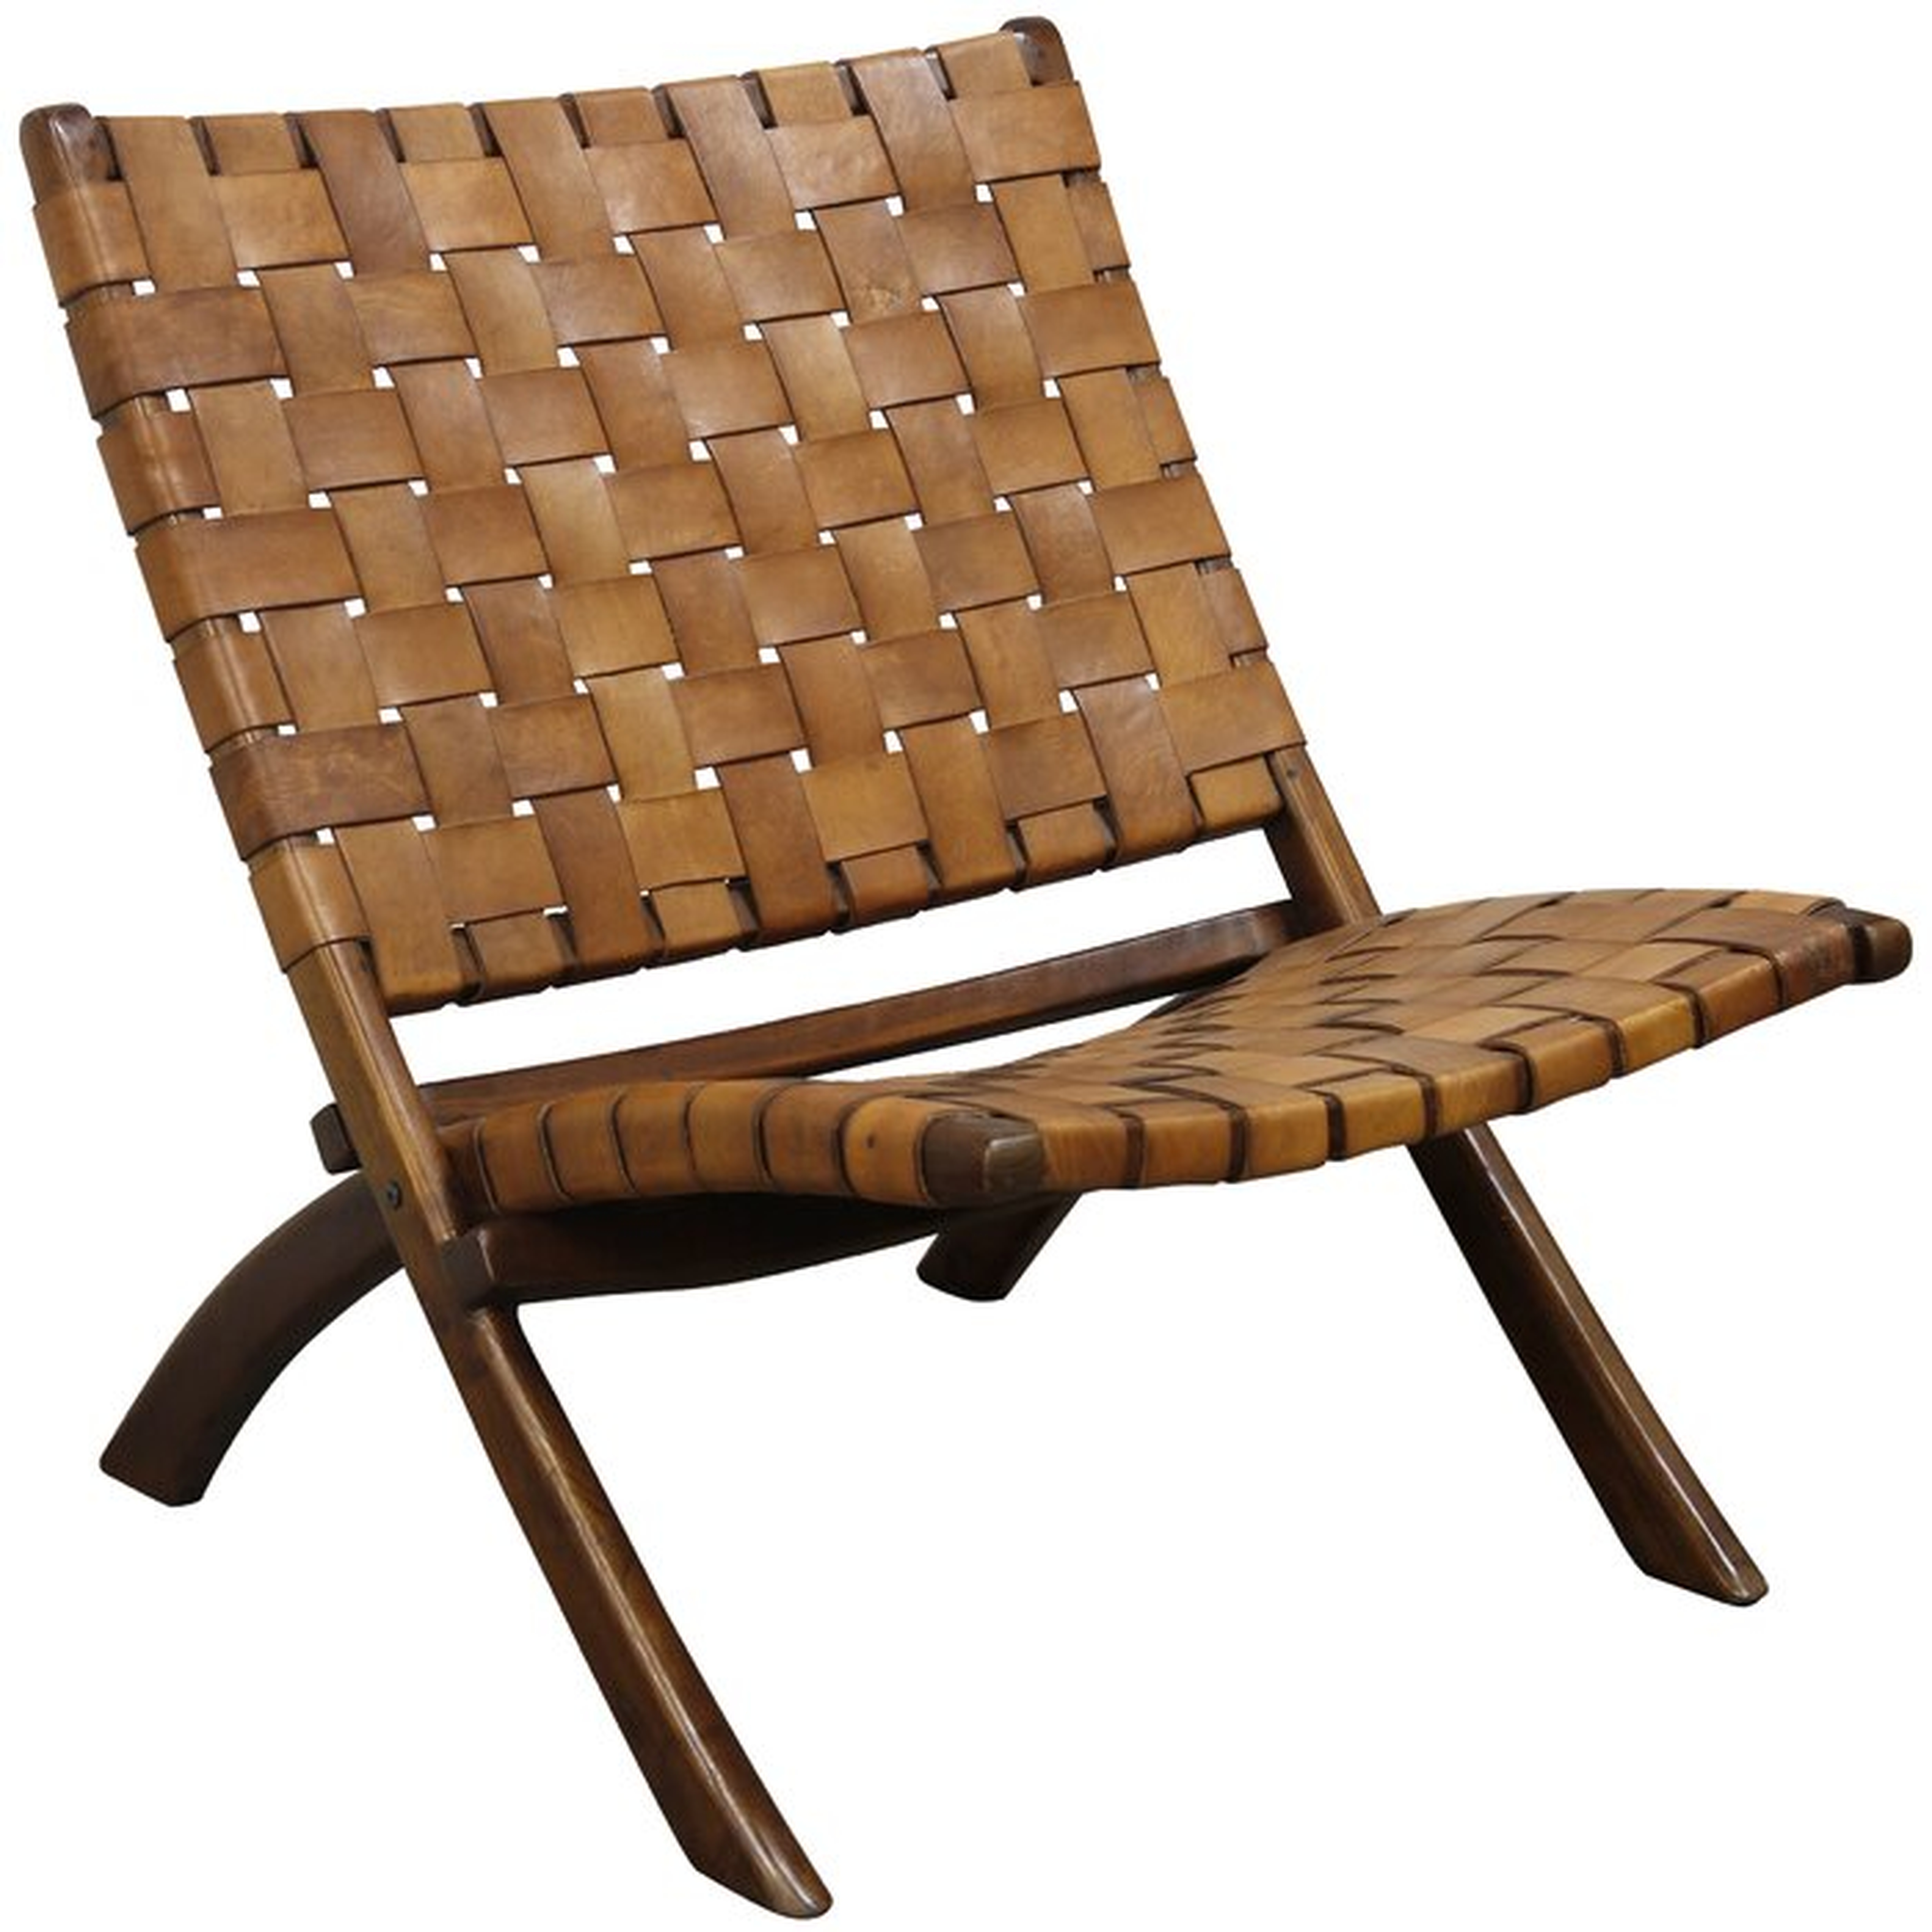 Baez Mid Century Modern Lounge Chair in Cognac - Wayfair